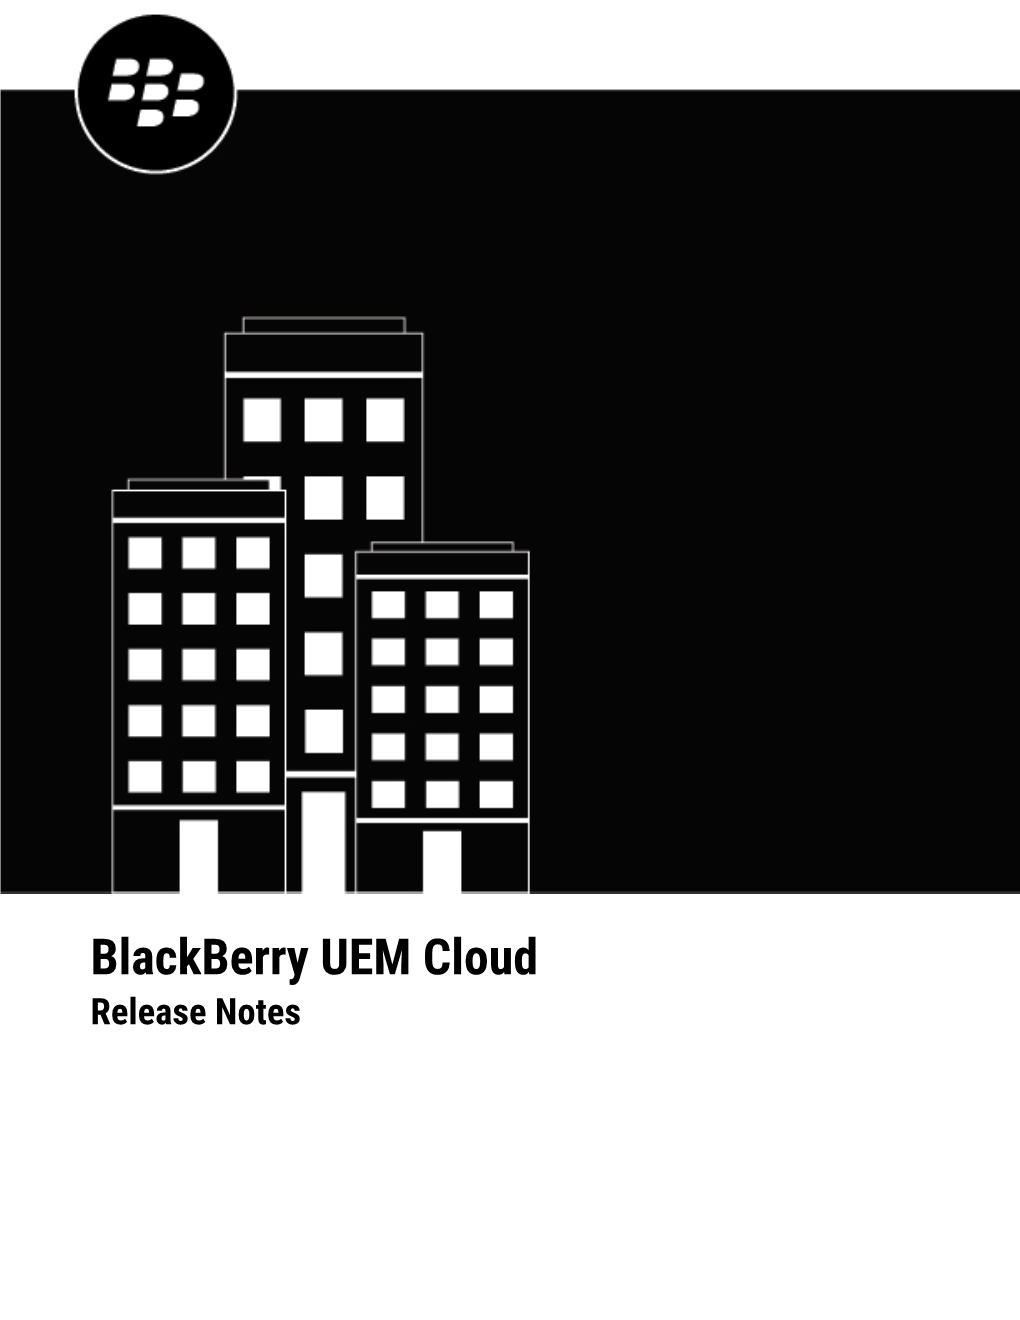 Blackberry UEM Cloud Release Notes 2021-04-07Z